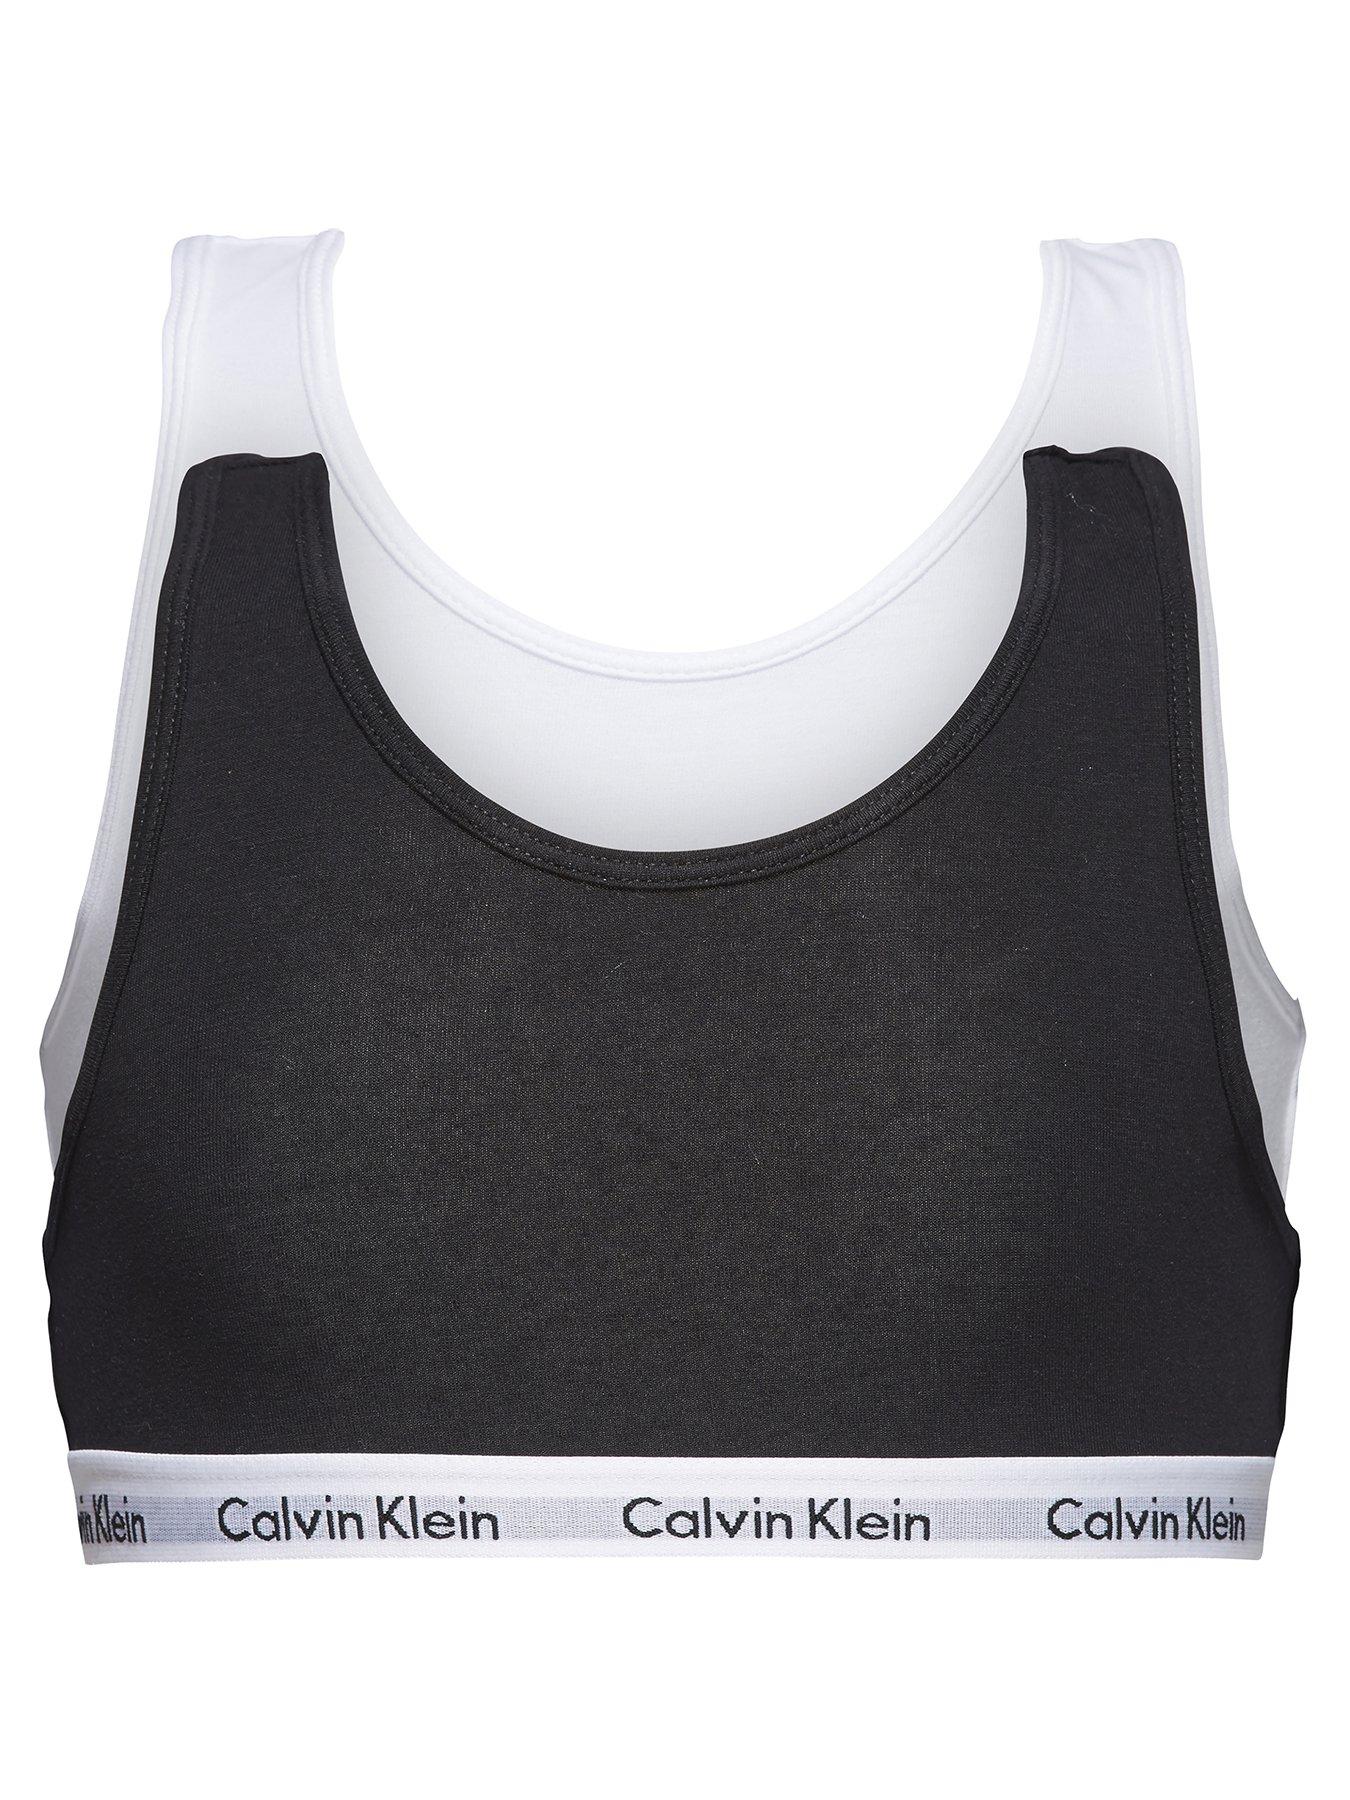 Calvin Klein - Girls Grey & Black Bralettes (3 Pack